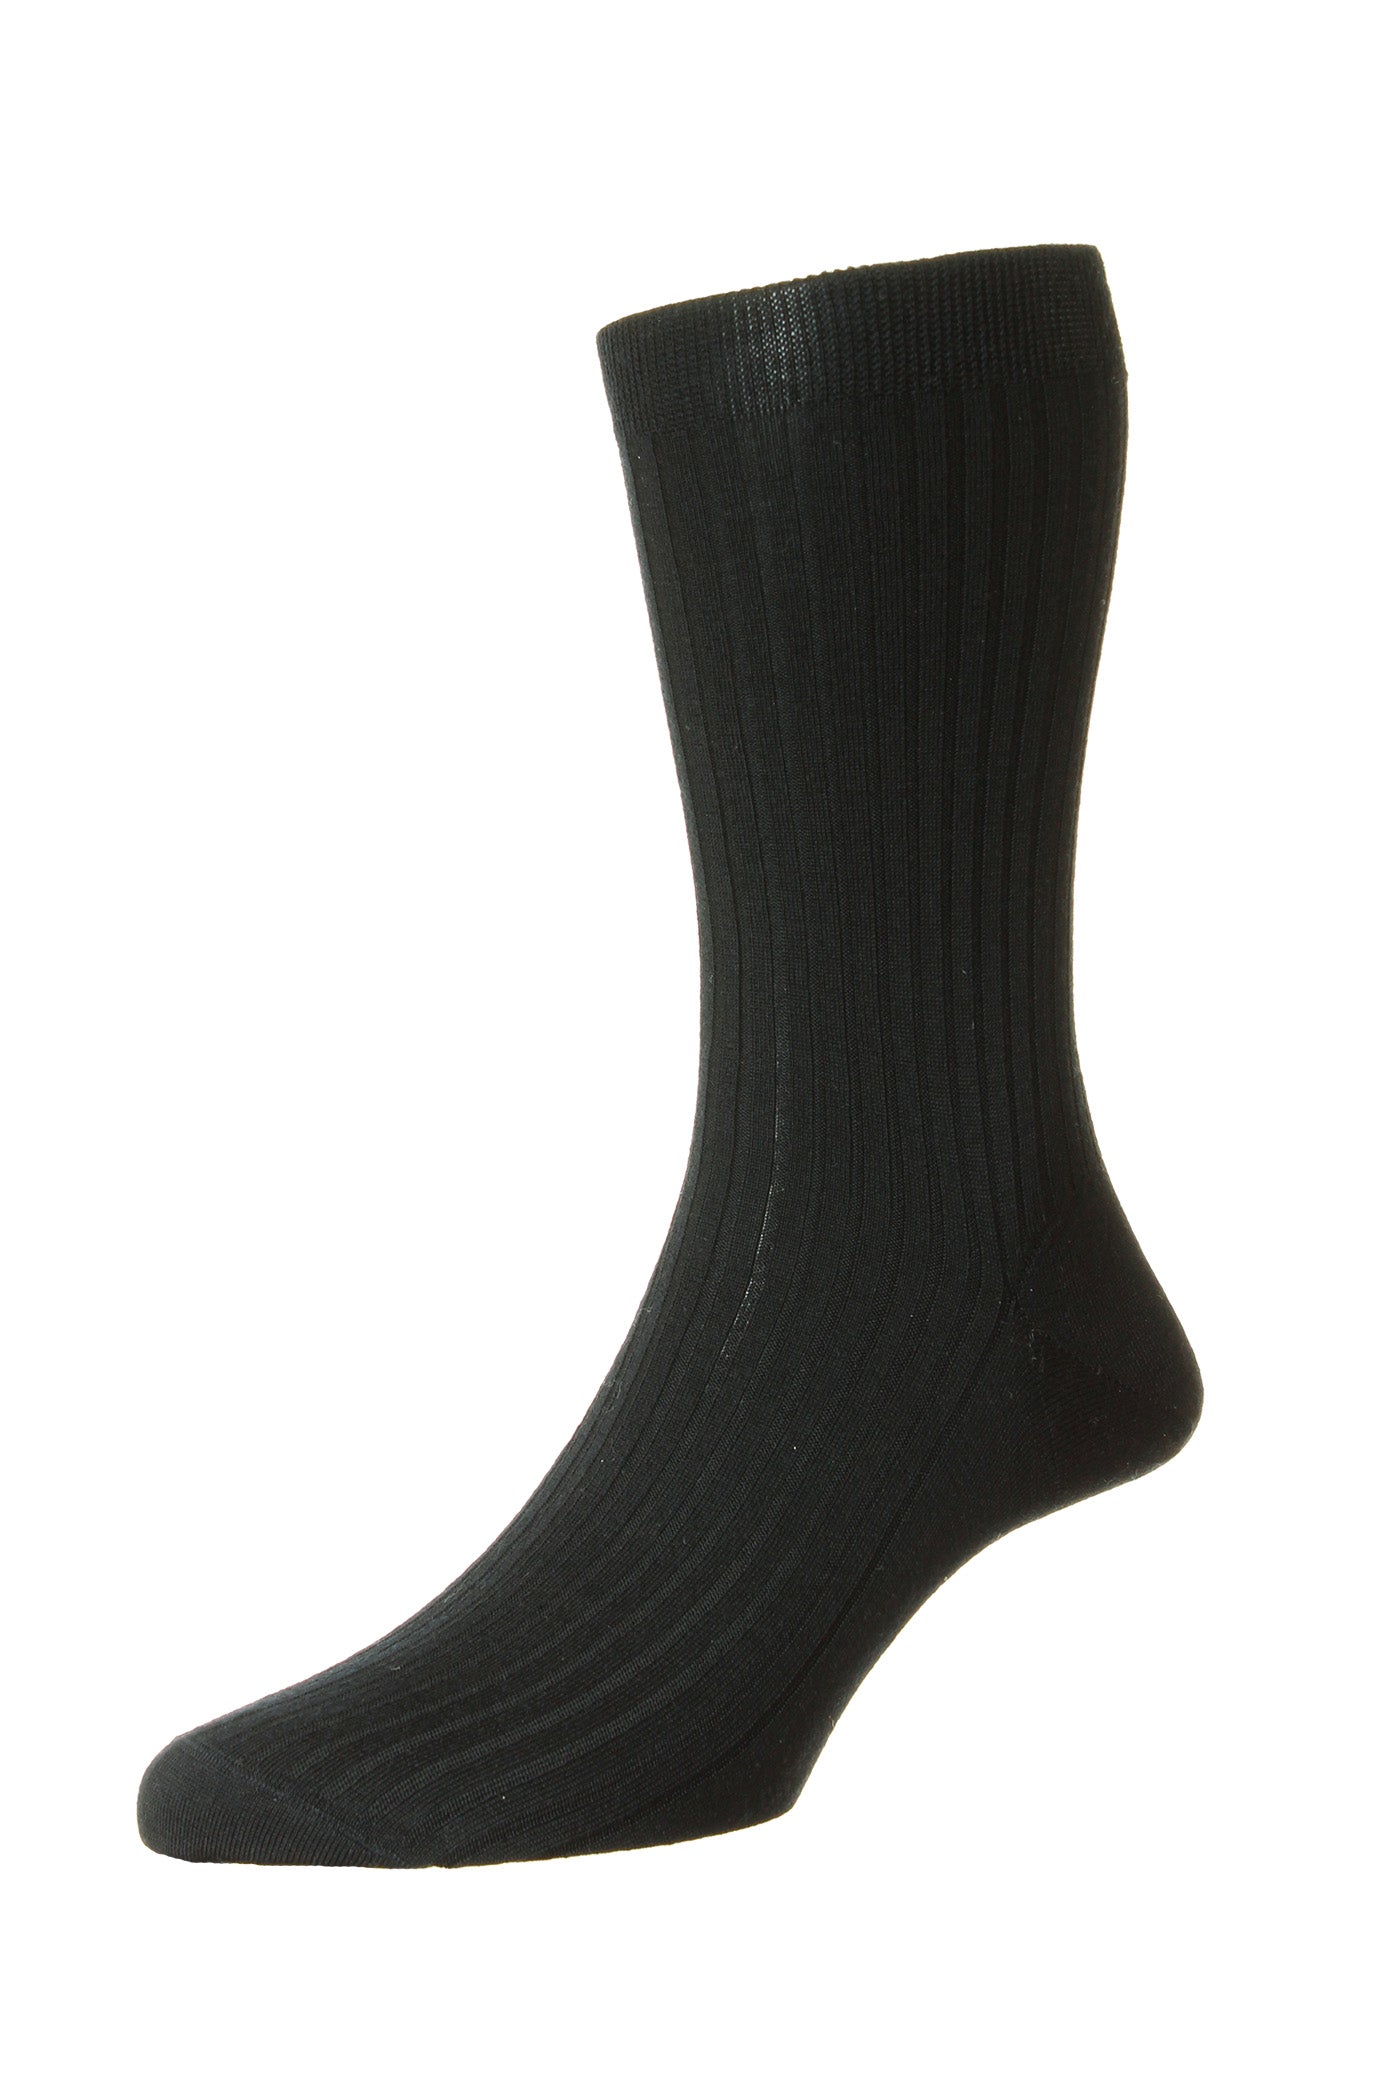 Pantherella Kangley Merino Super 100s Socks Black